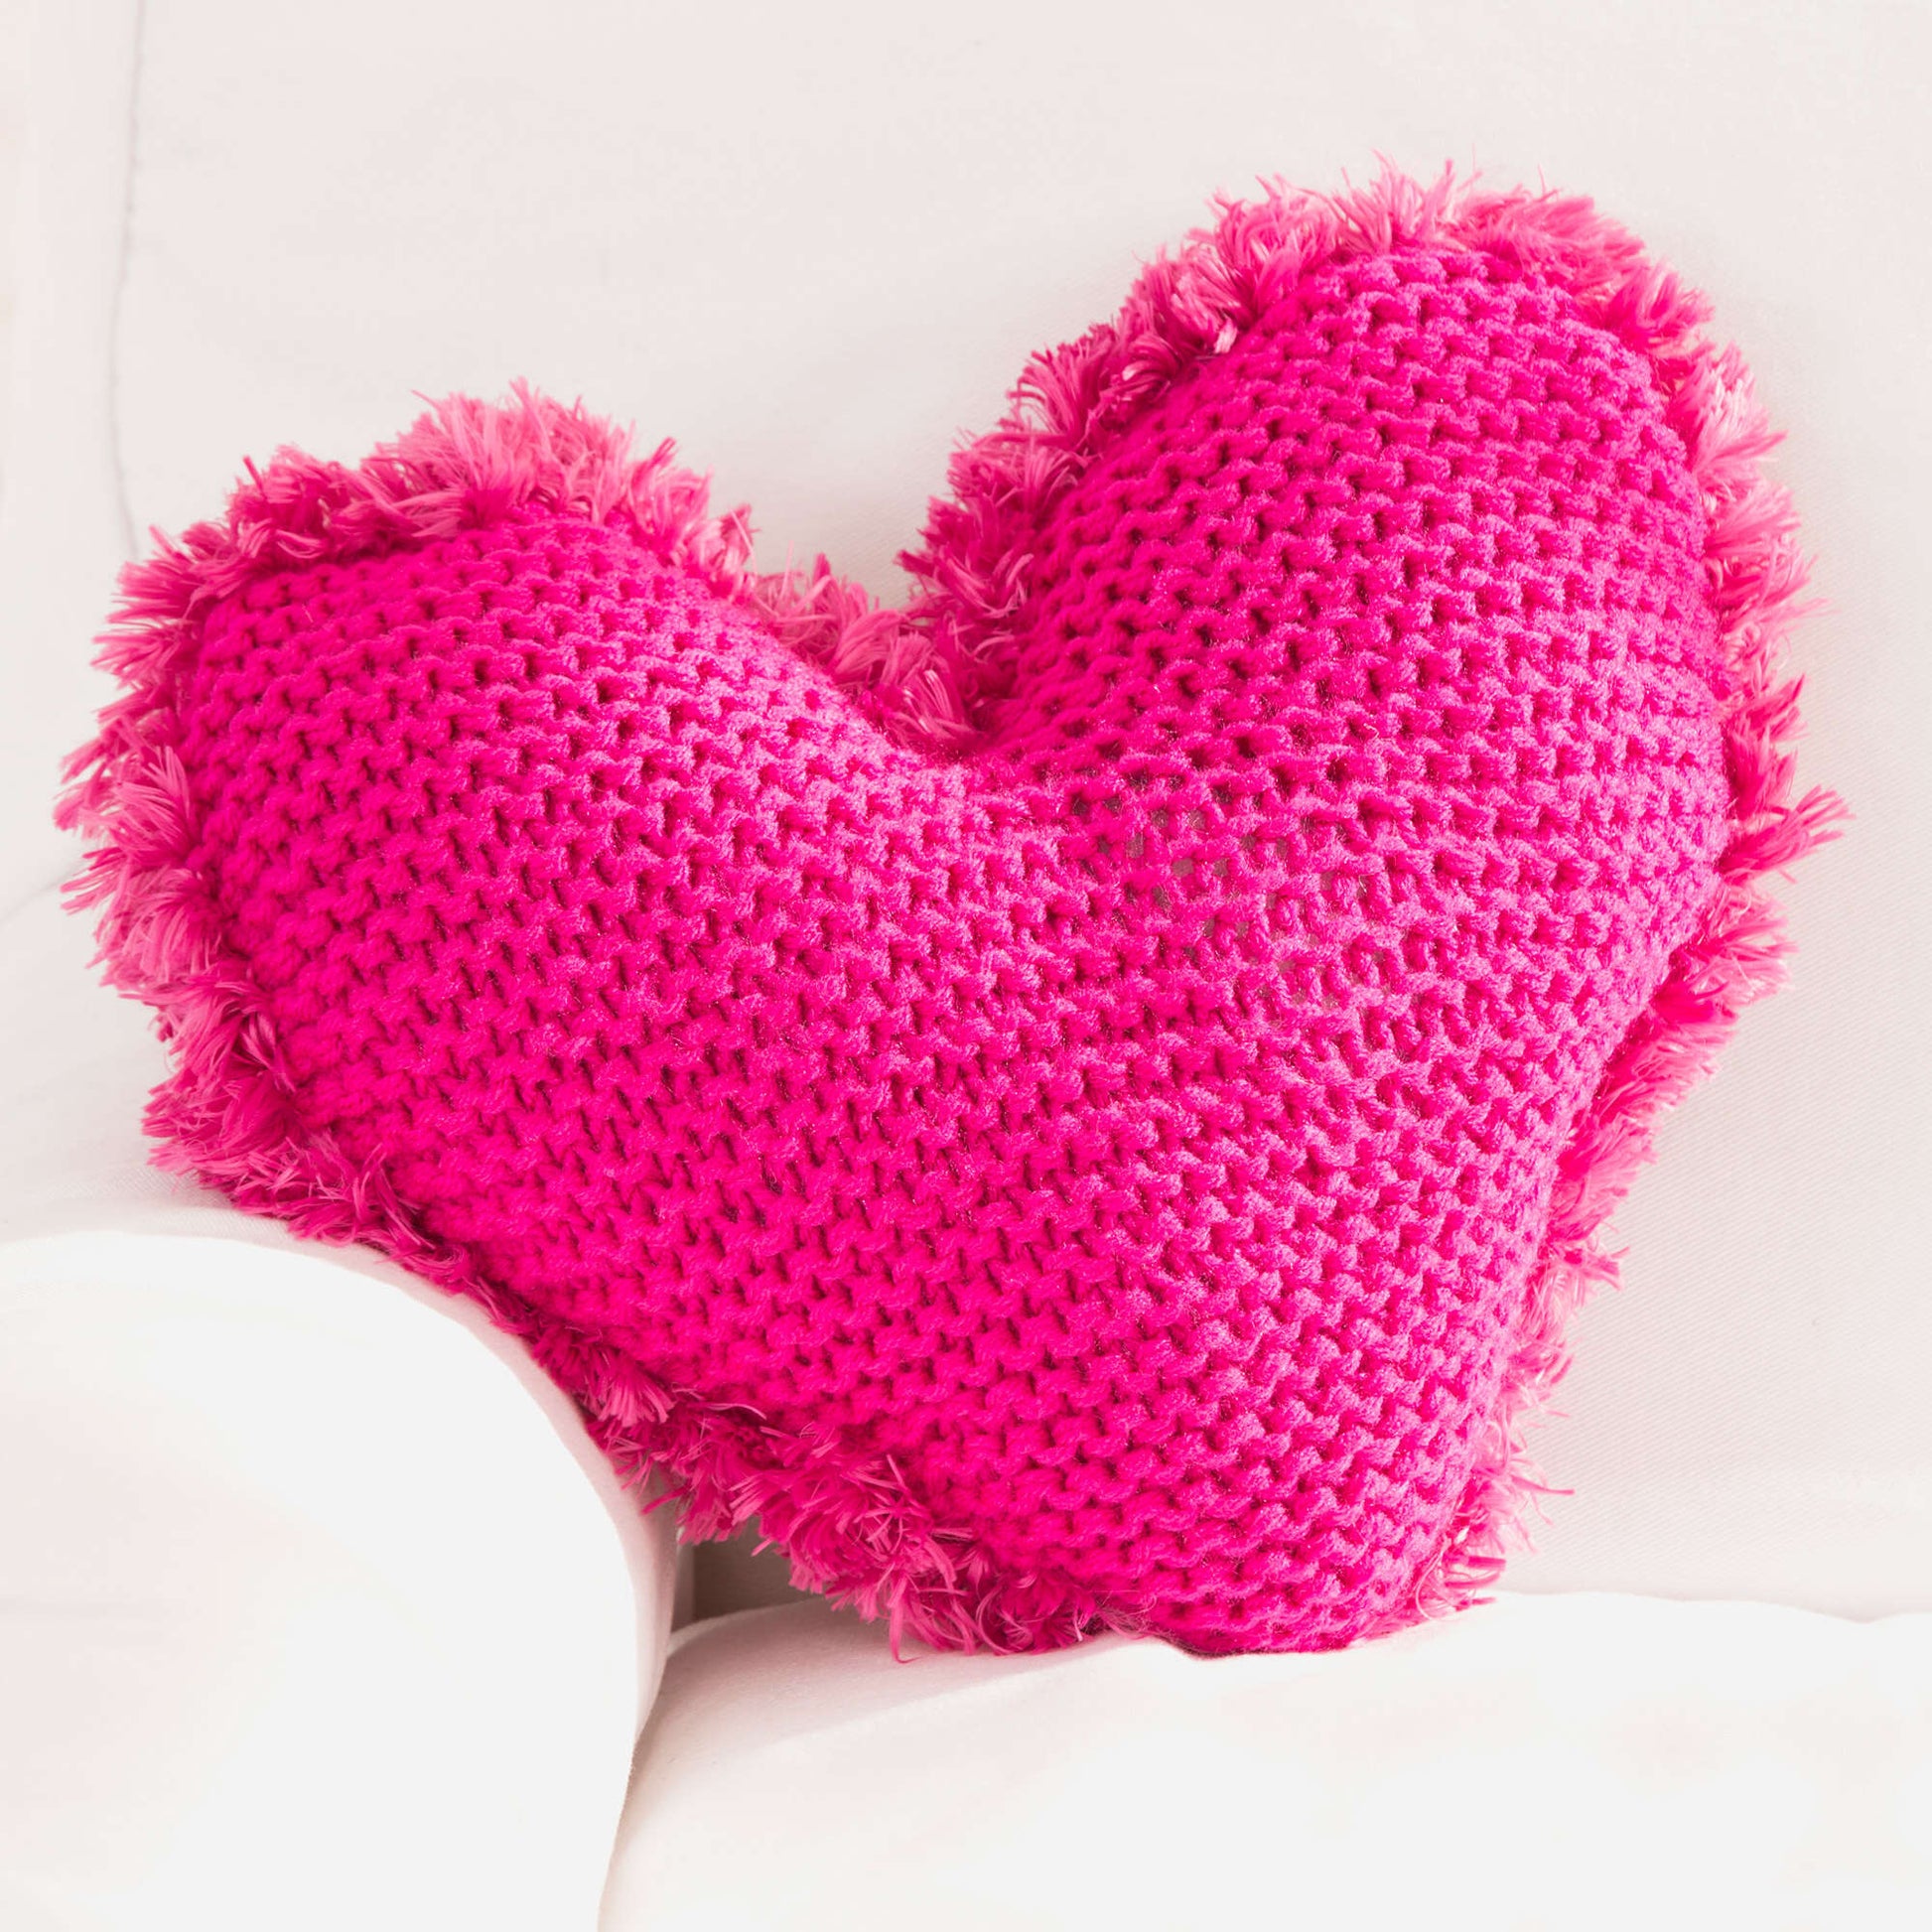 Free Red Heart Be Still My Heart Pillow Knit Pattern